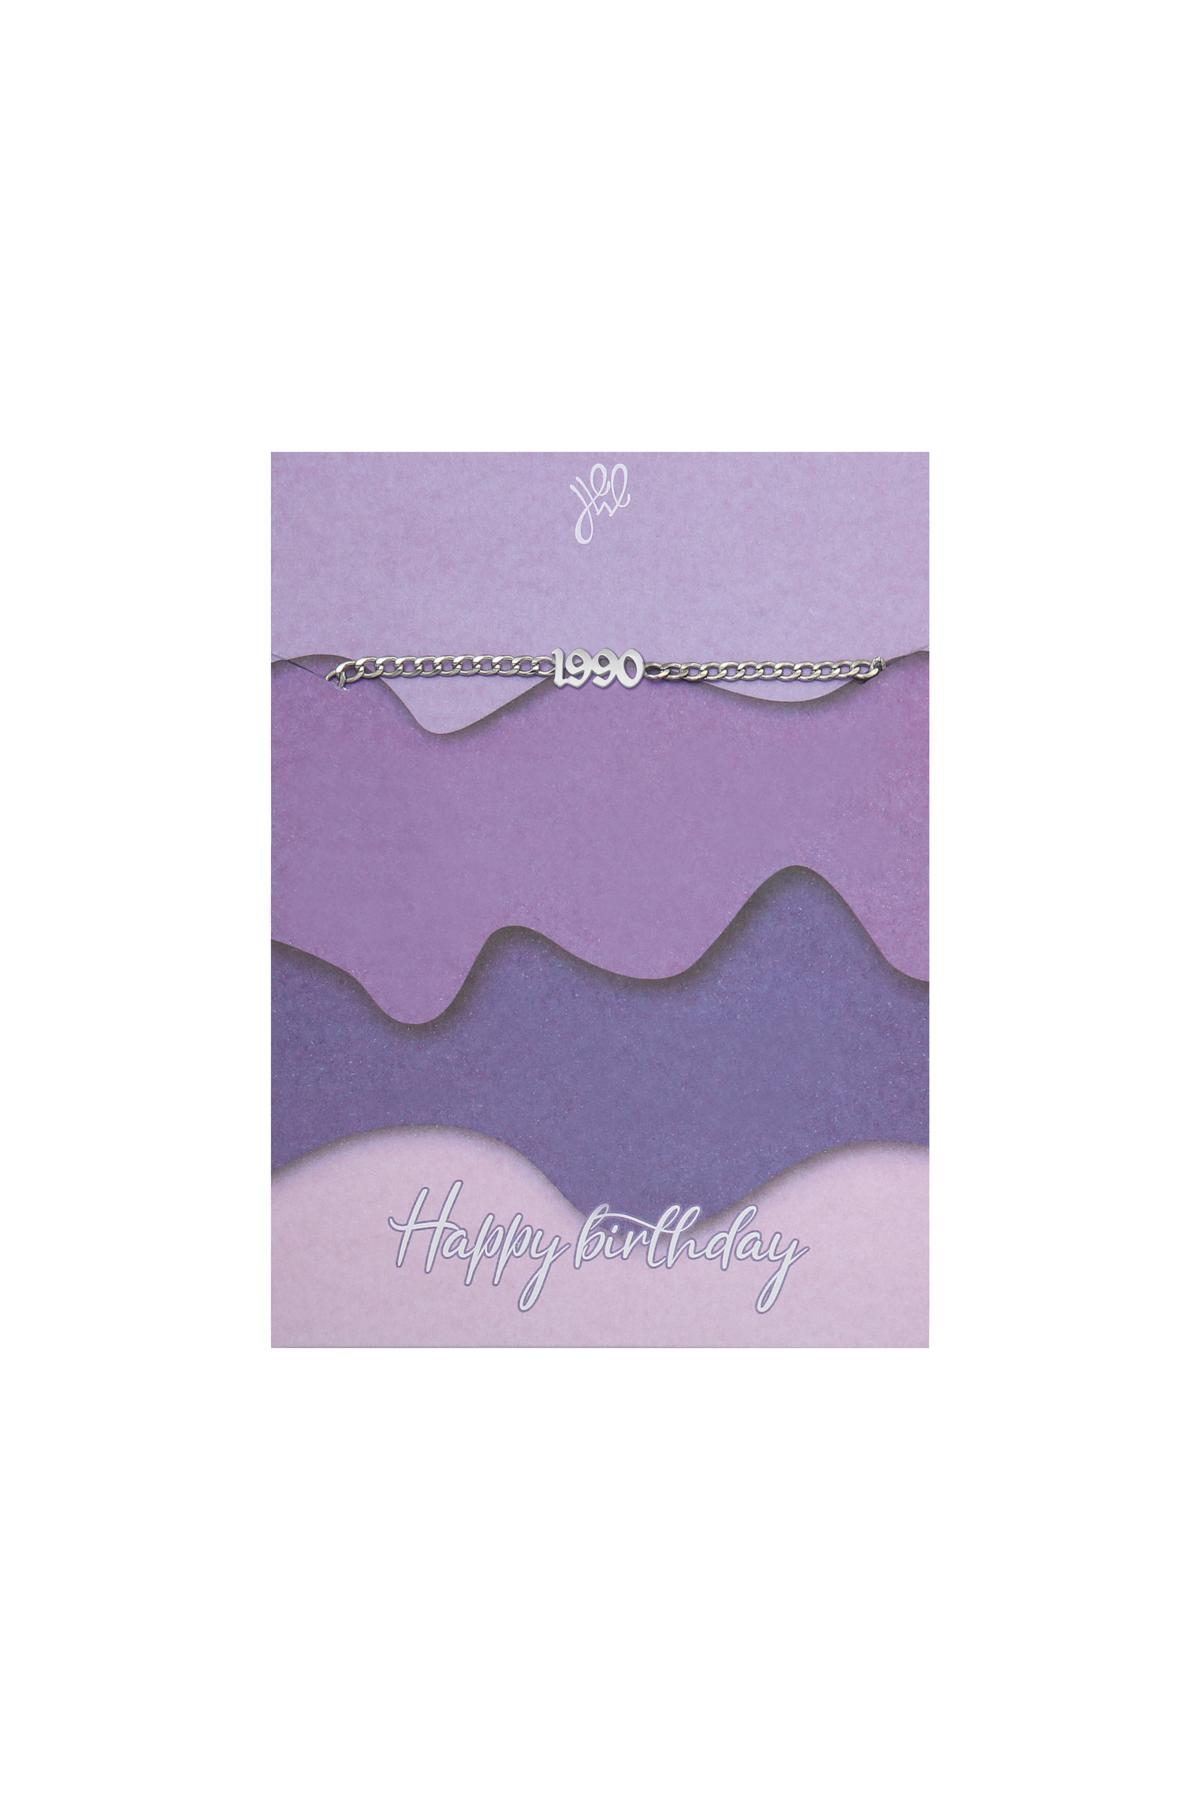 Silber / Armband Happy Birthday Years - 1990 Silber Edelstahl Bild13